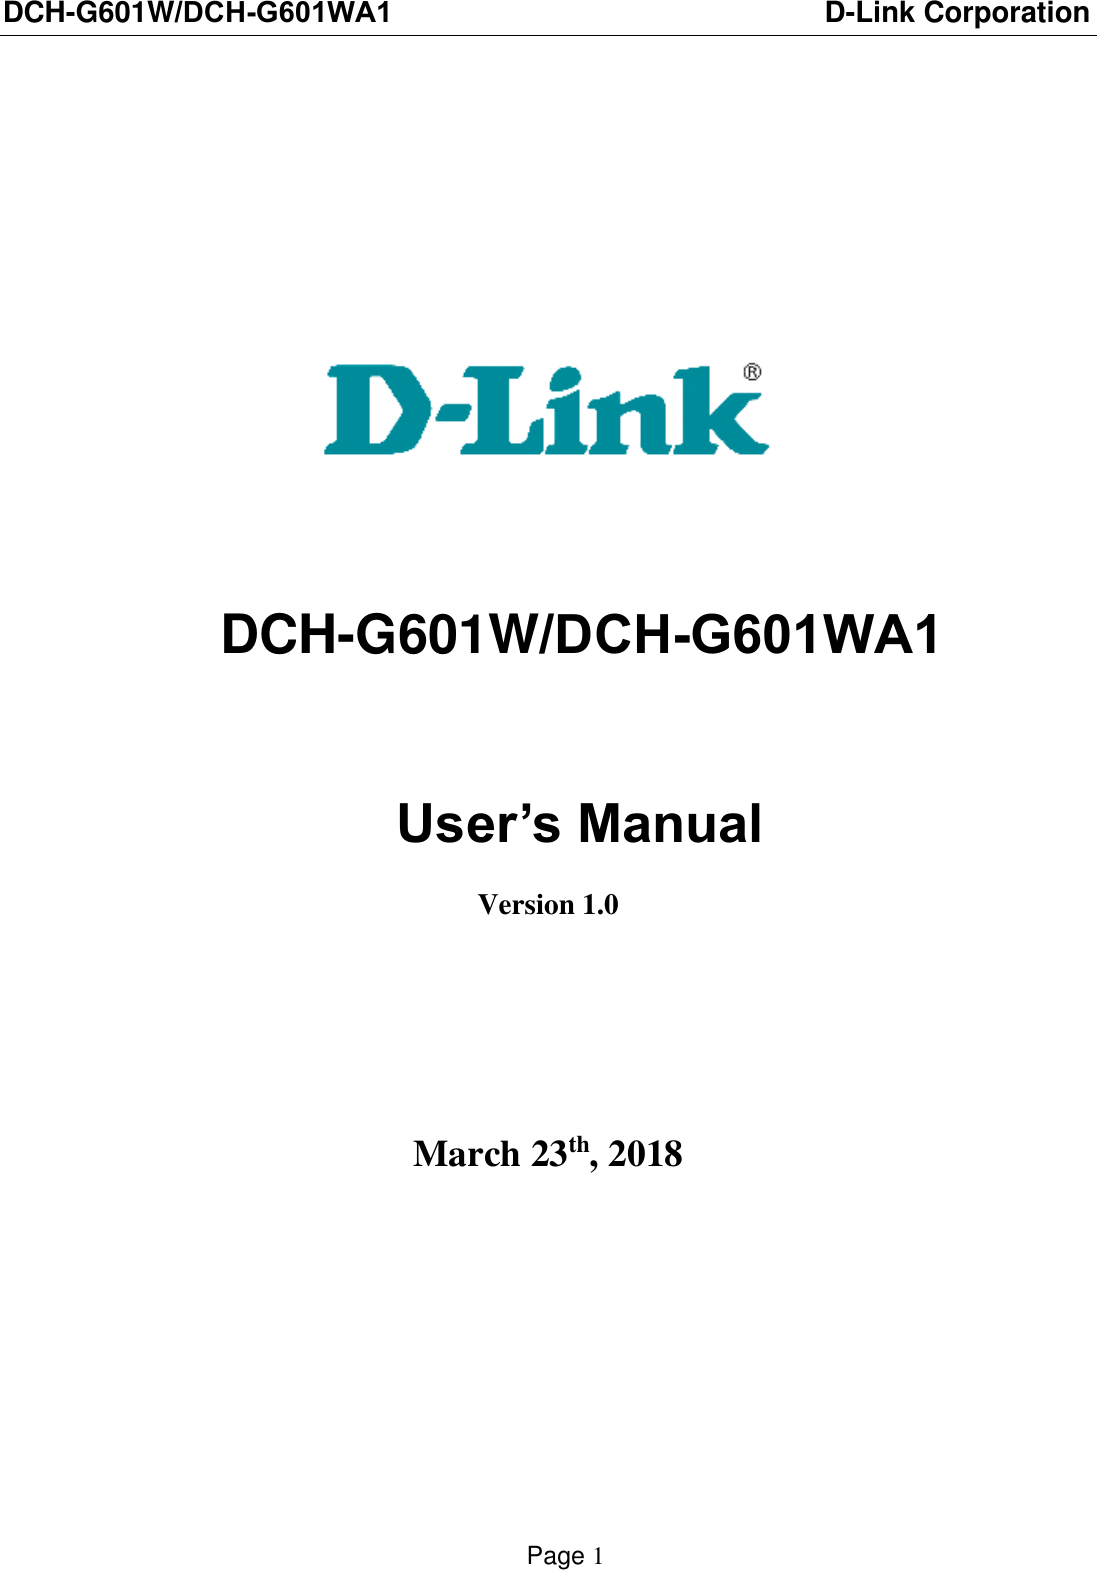 DCH-G601W/DCH-G601WA1 D-Link CorporationPage 1 DCH-G601W/DCH-G601WA1 User’s ManualVersion 1.0March 23th, 2018